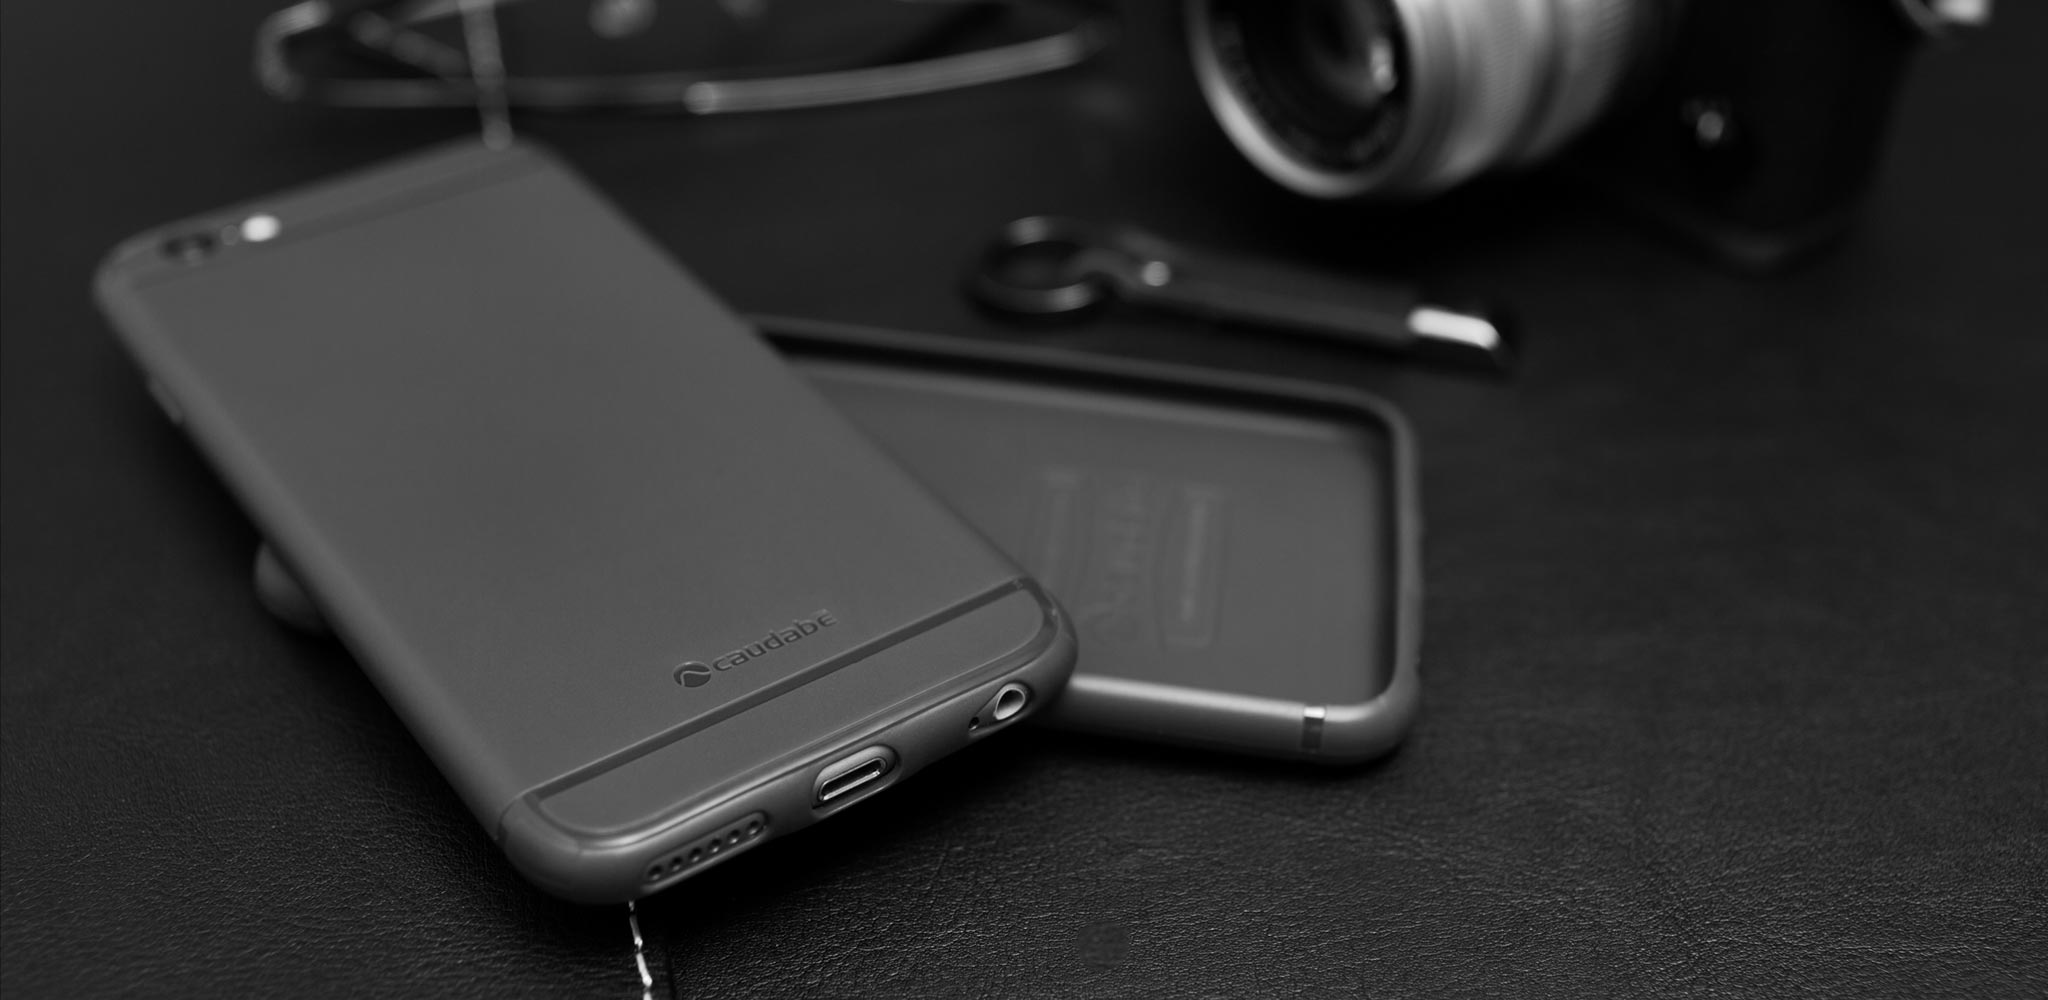 The Sheath | Super slim, shock-absorbing, minimalist iPhone case | camera